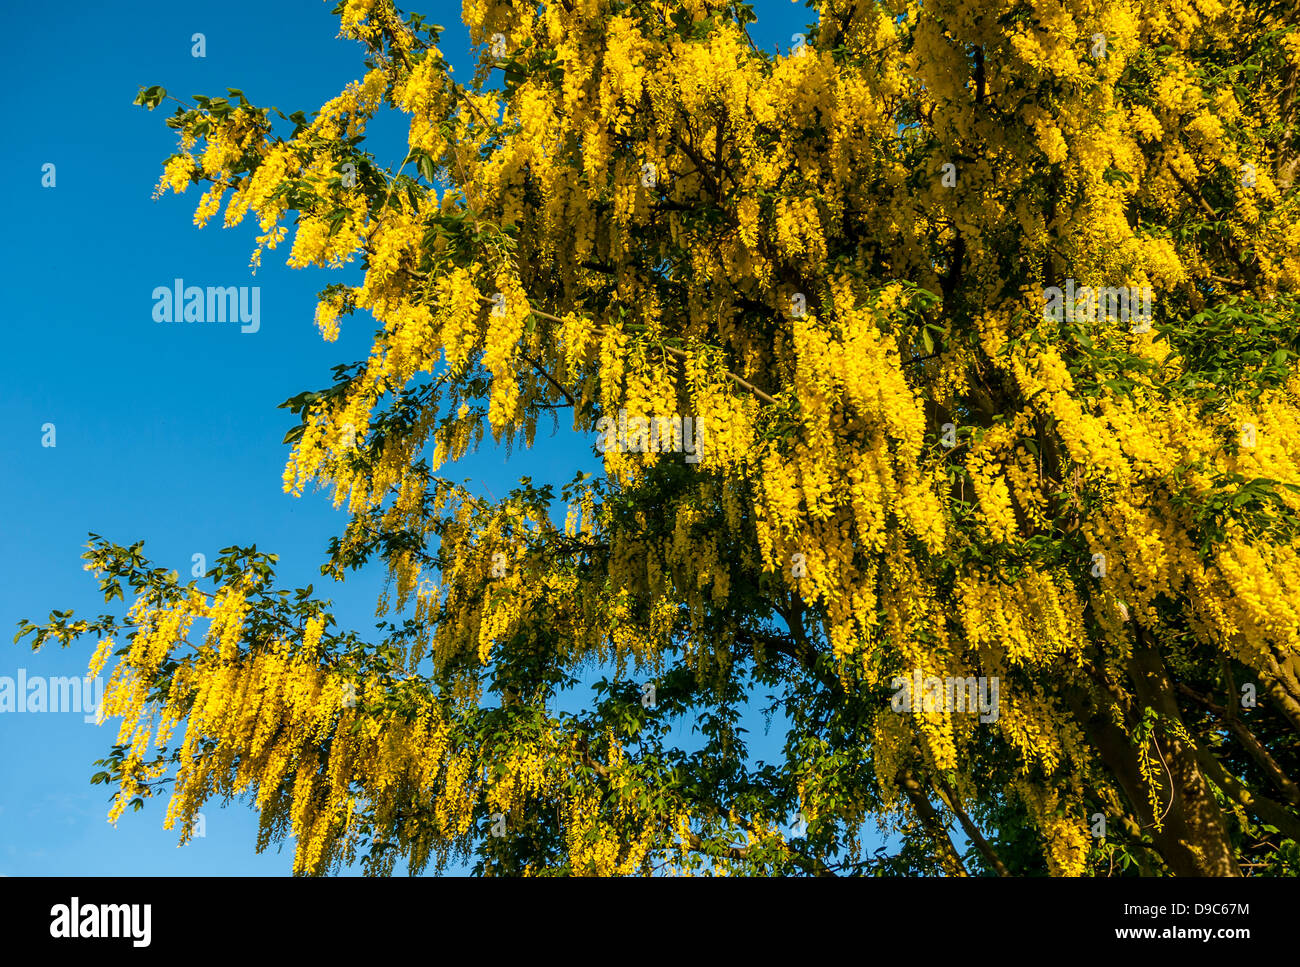 Vivid yellow Laburnum blossom contrasting against a blue sky Stock Photo